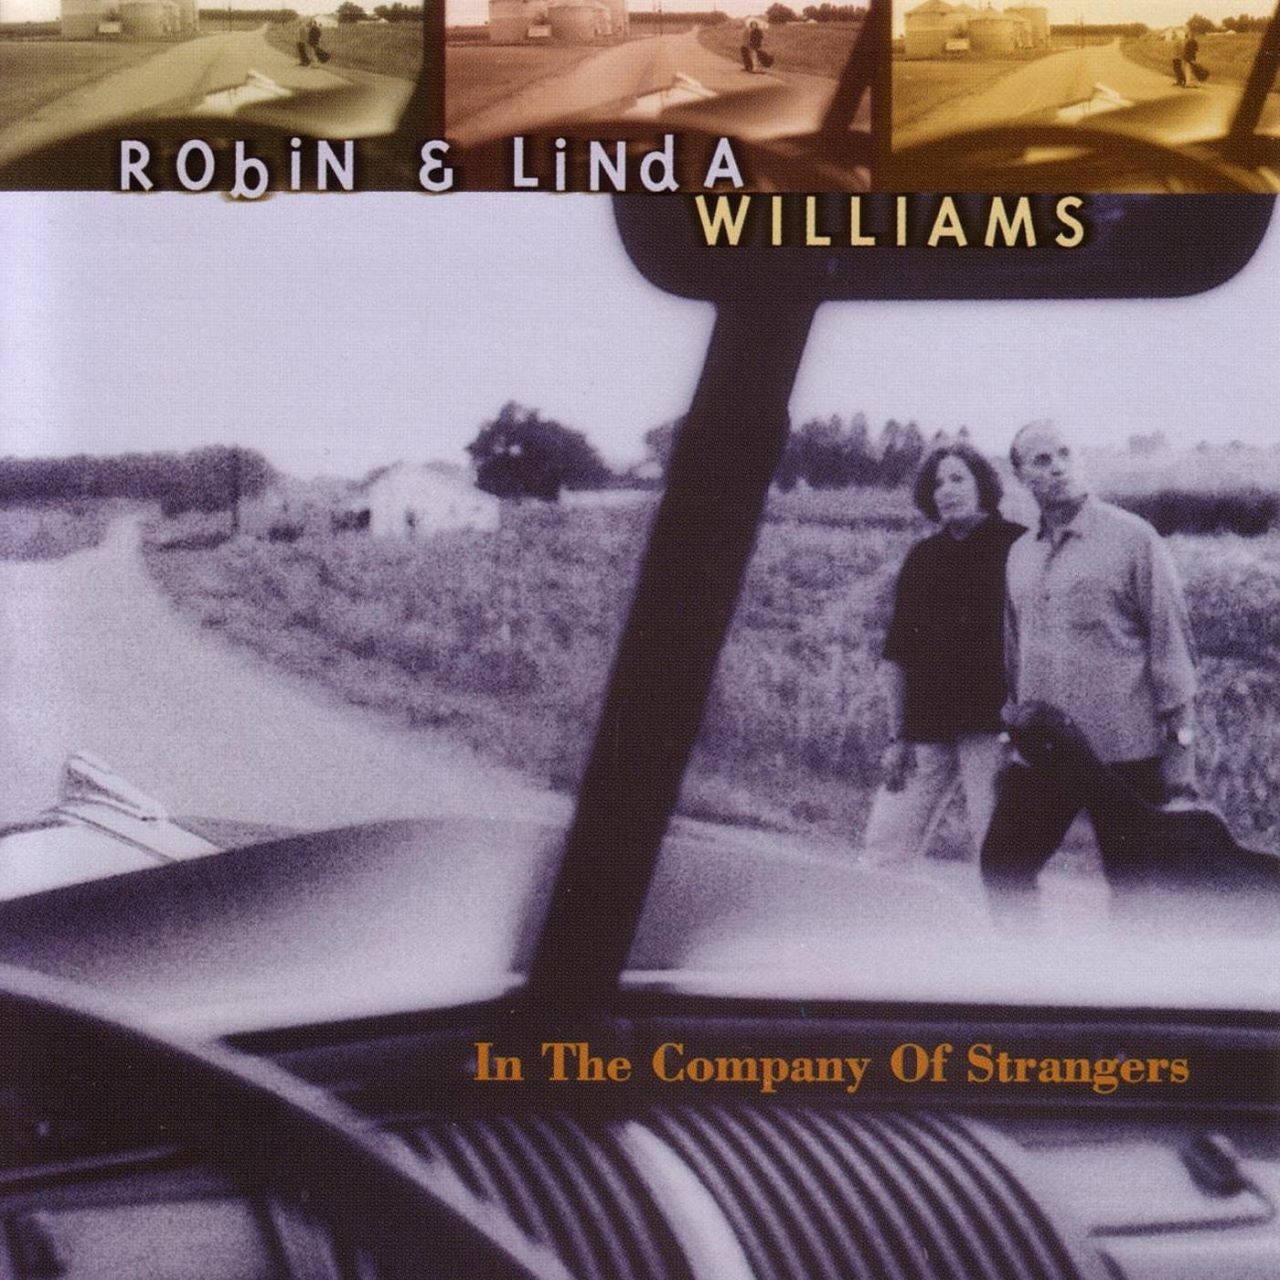 Robin & Linda Williams - In The Company Of Strangers cover album